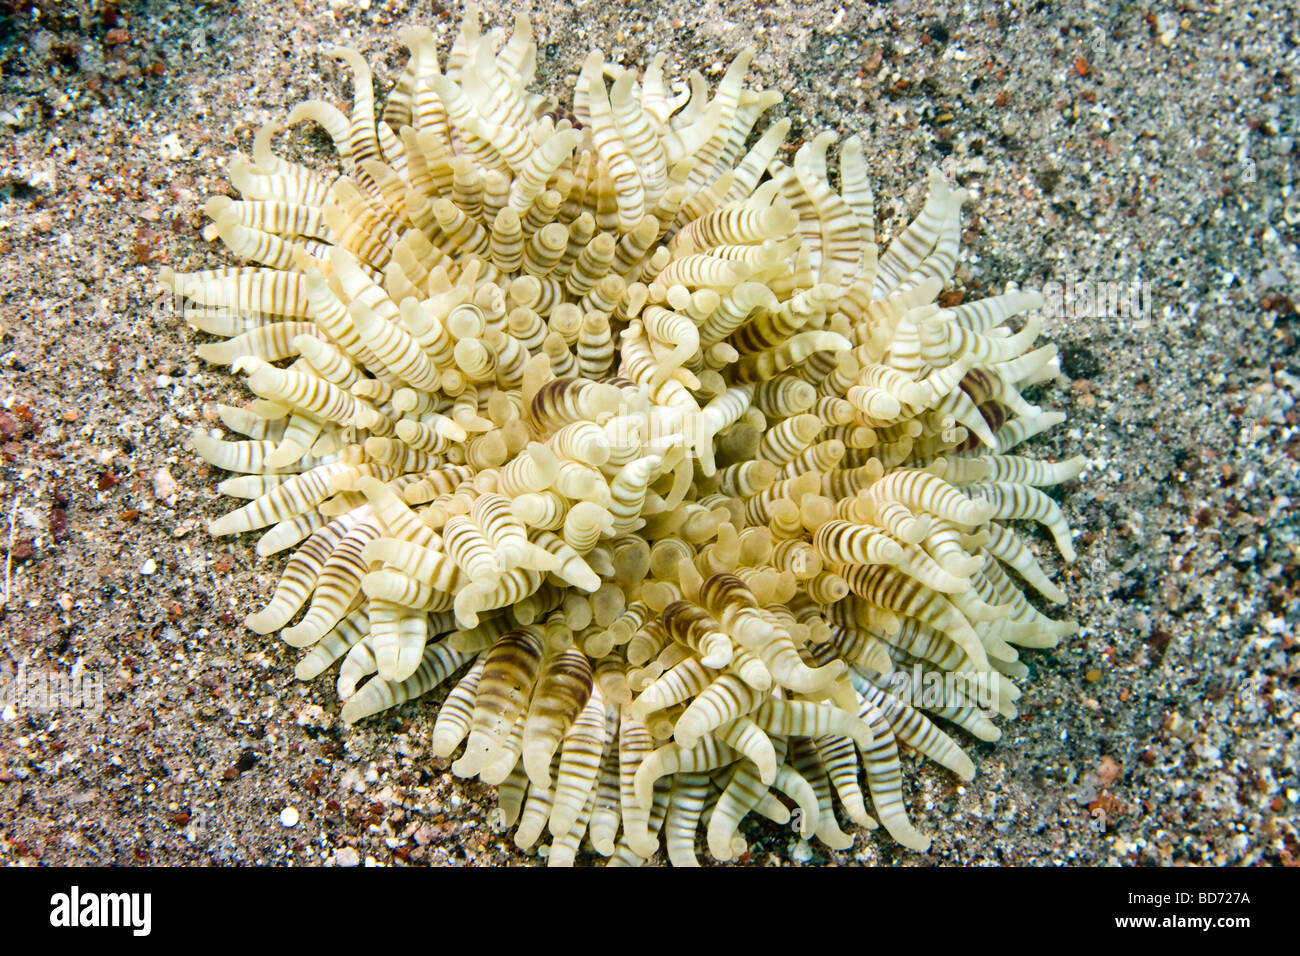 Heteractis aurora, Beaded sea anemone Stock Photo